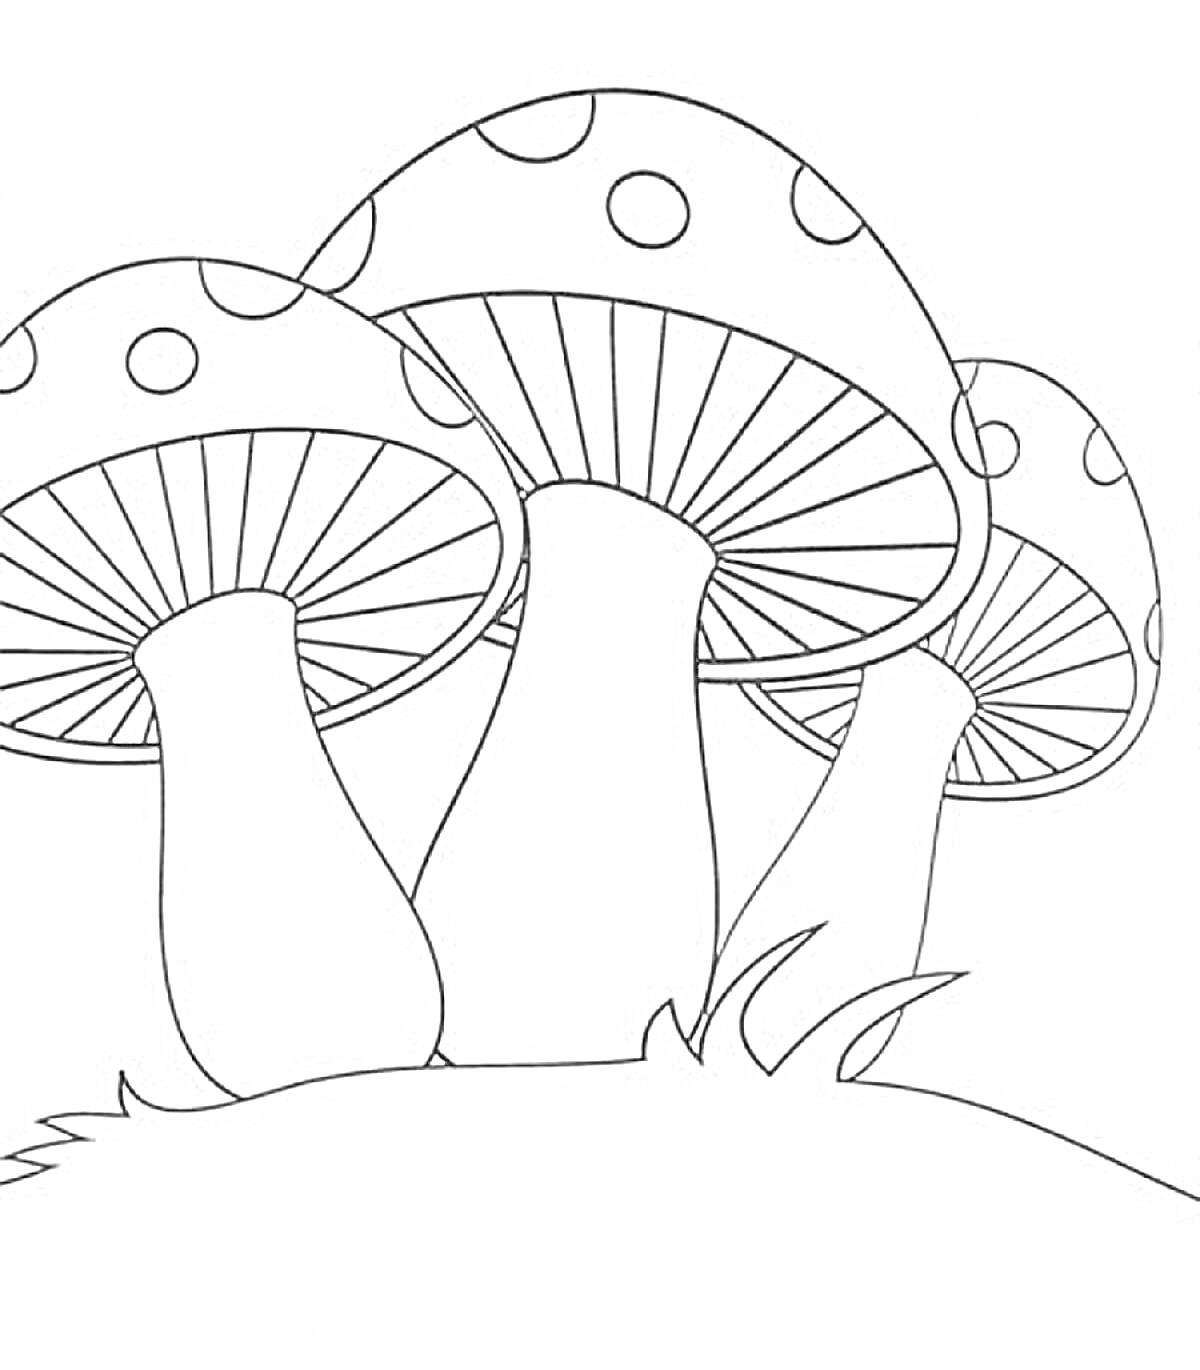 Раскраска Три мухомора на лесной поляне